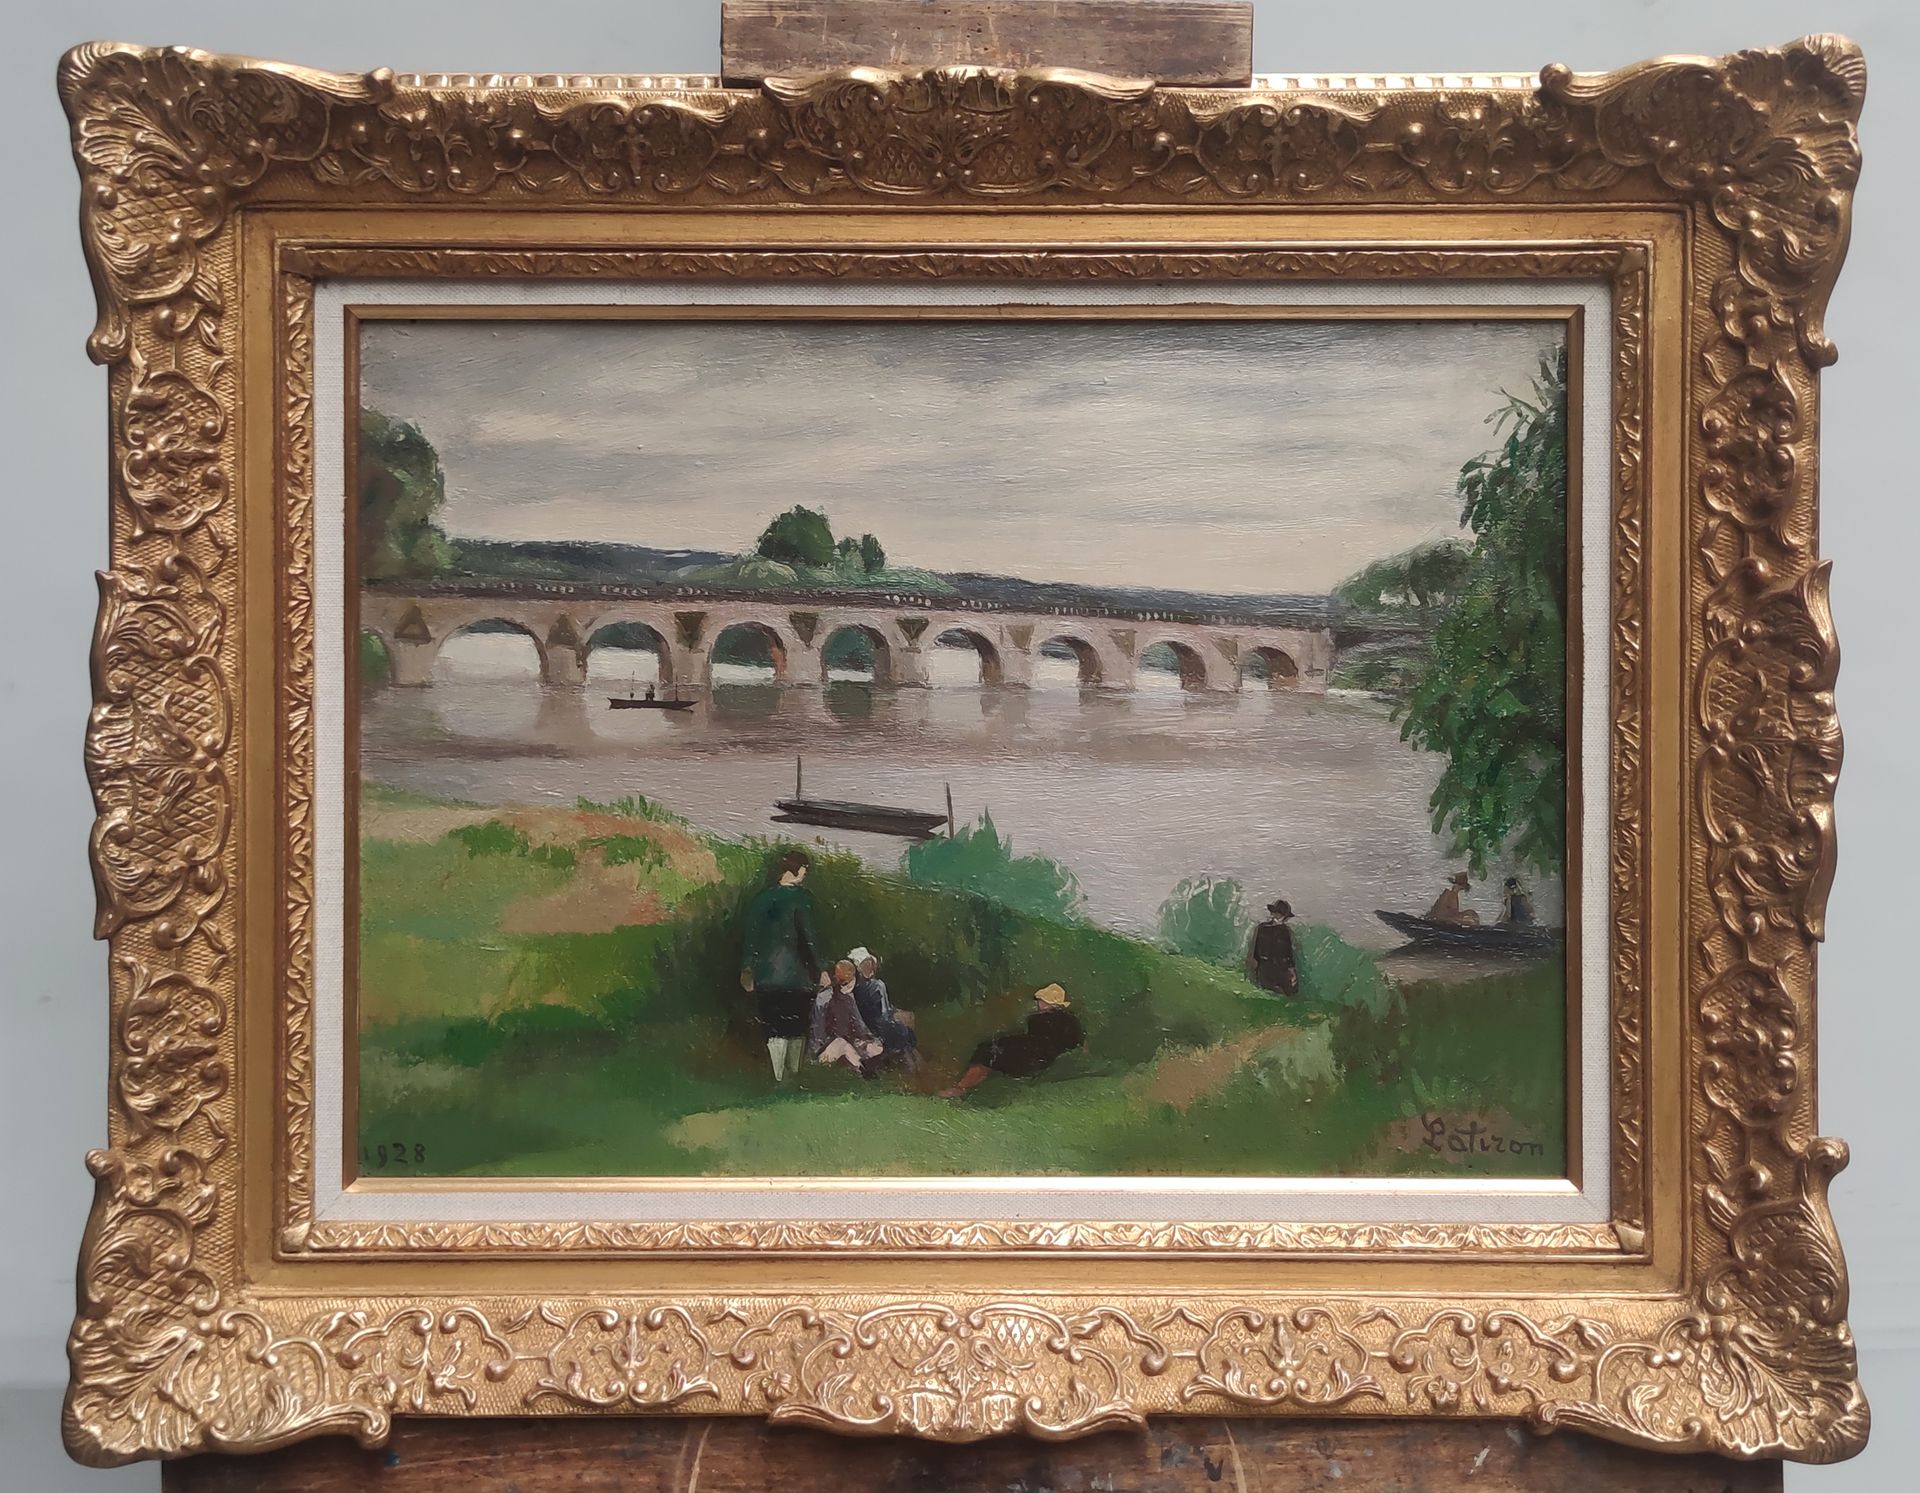 Null 
罗伯特-洛特朗(1886-1966)

塞纳河畔的午后

布面油画，右下角有签名

33 x 46 厘米